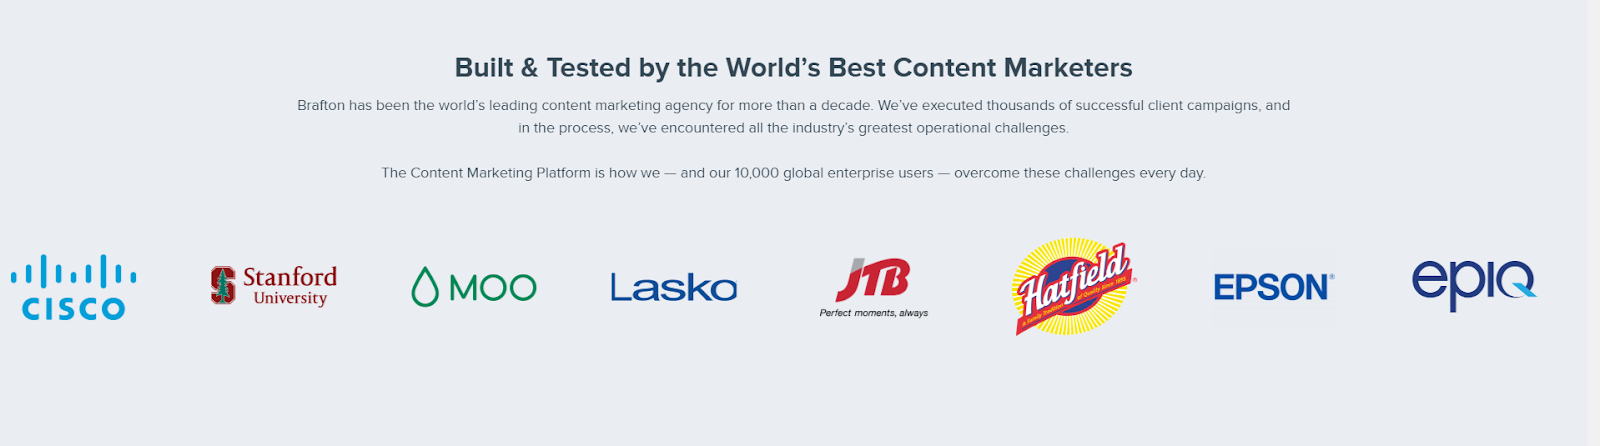 content marketing platform users